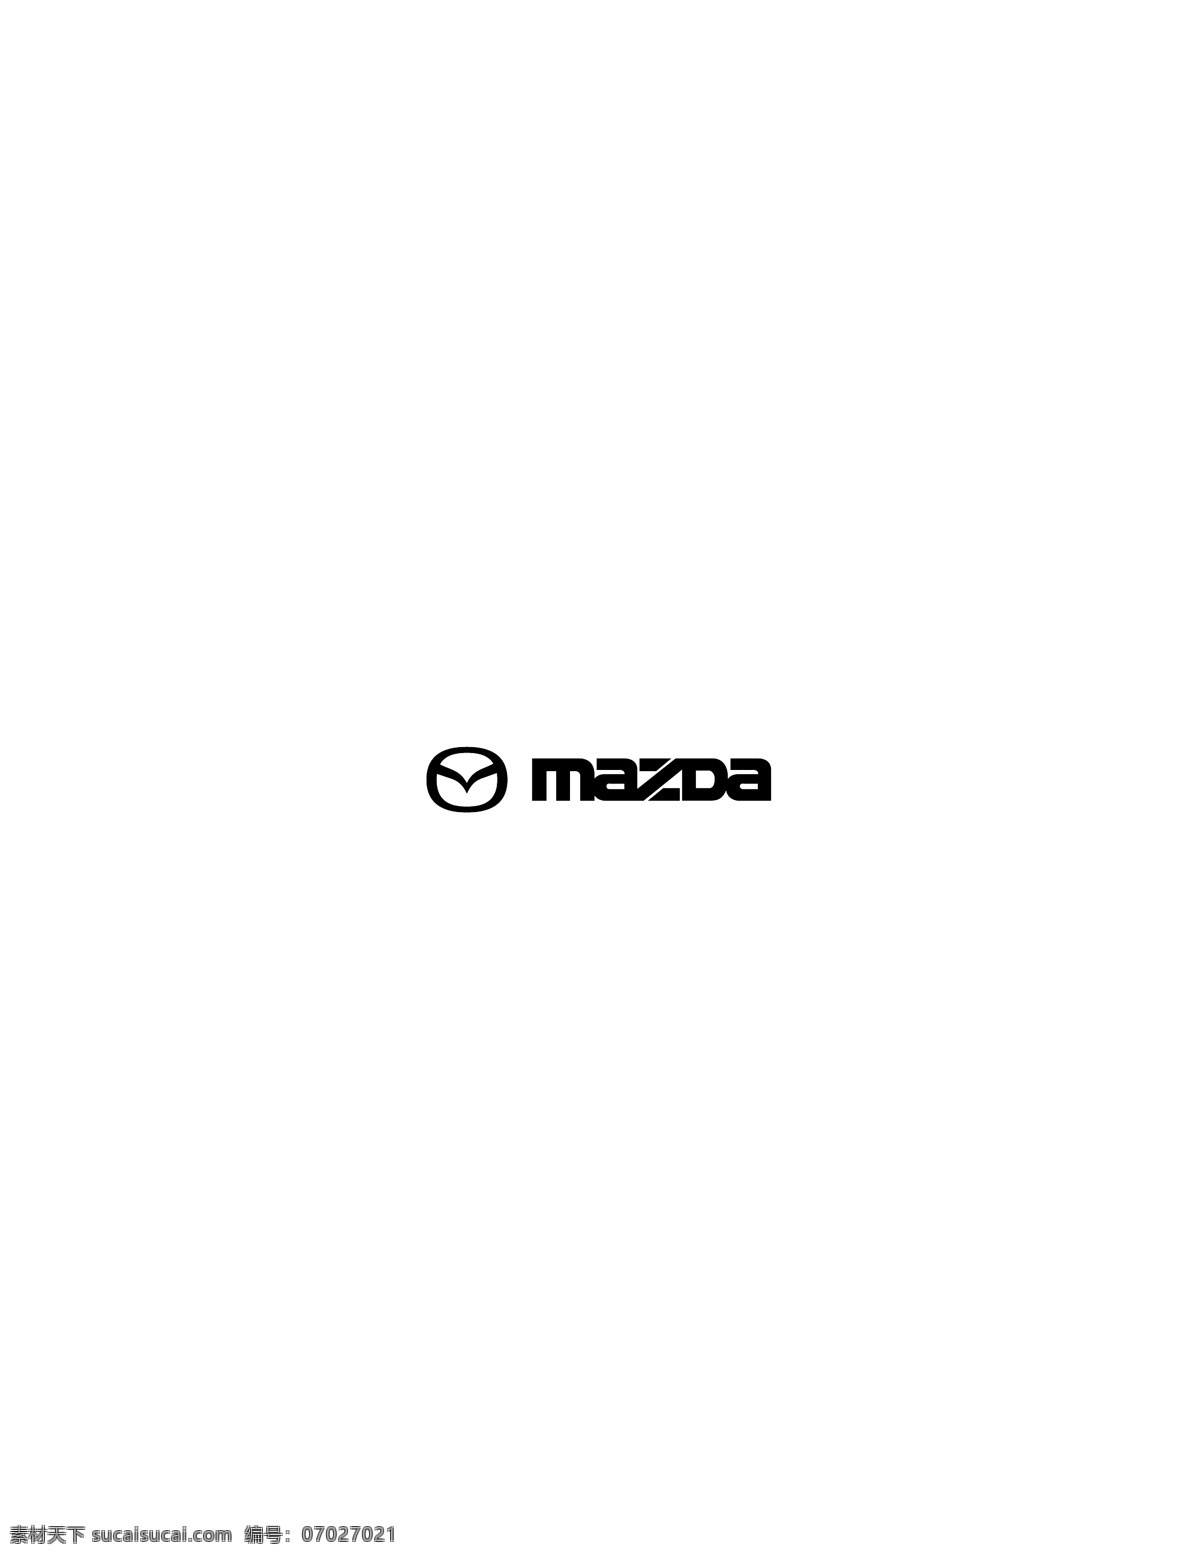 mazda logo大全 logo 设计欣赏 商业矢量 矢量下载 汽车 图 标志设计 欣赏 网页矢量 矢量图 其他矢量图